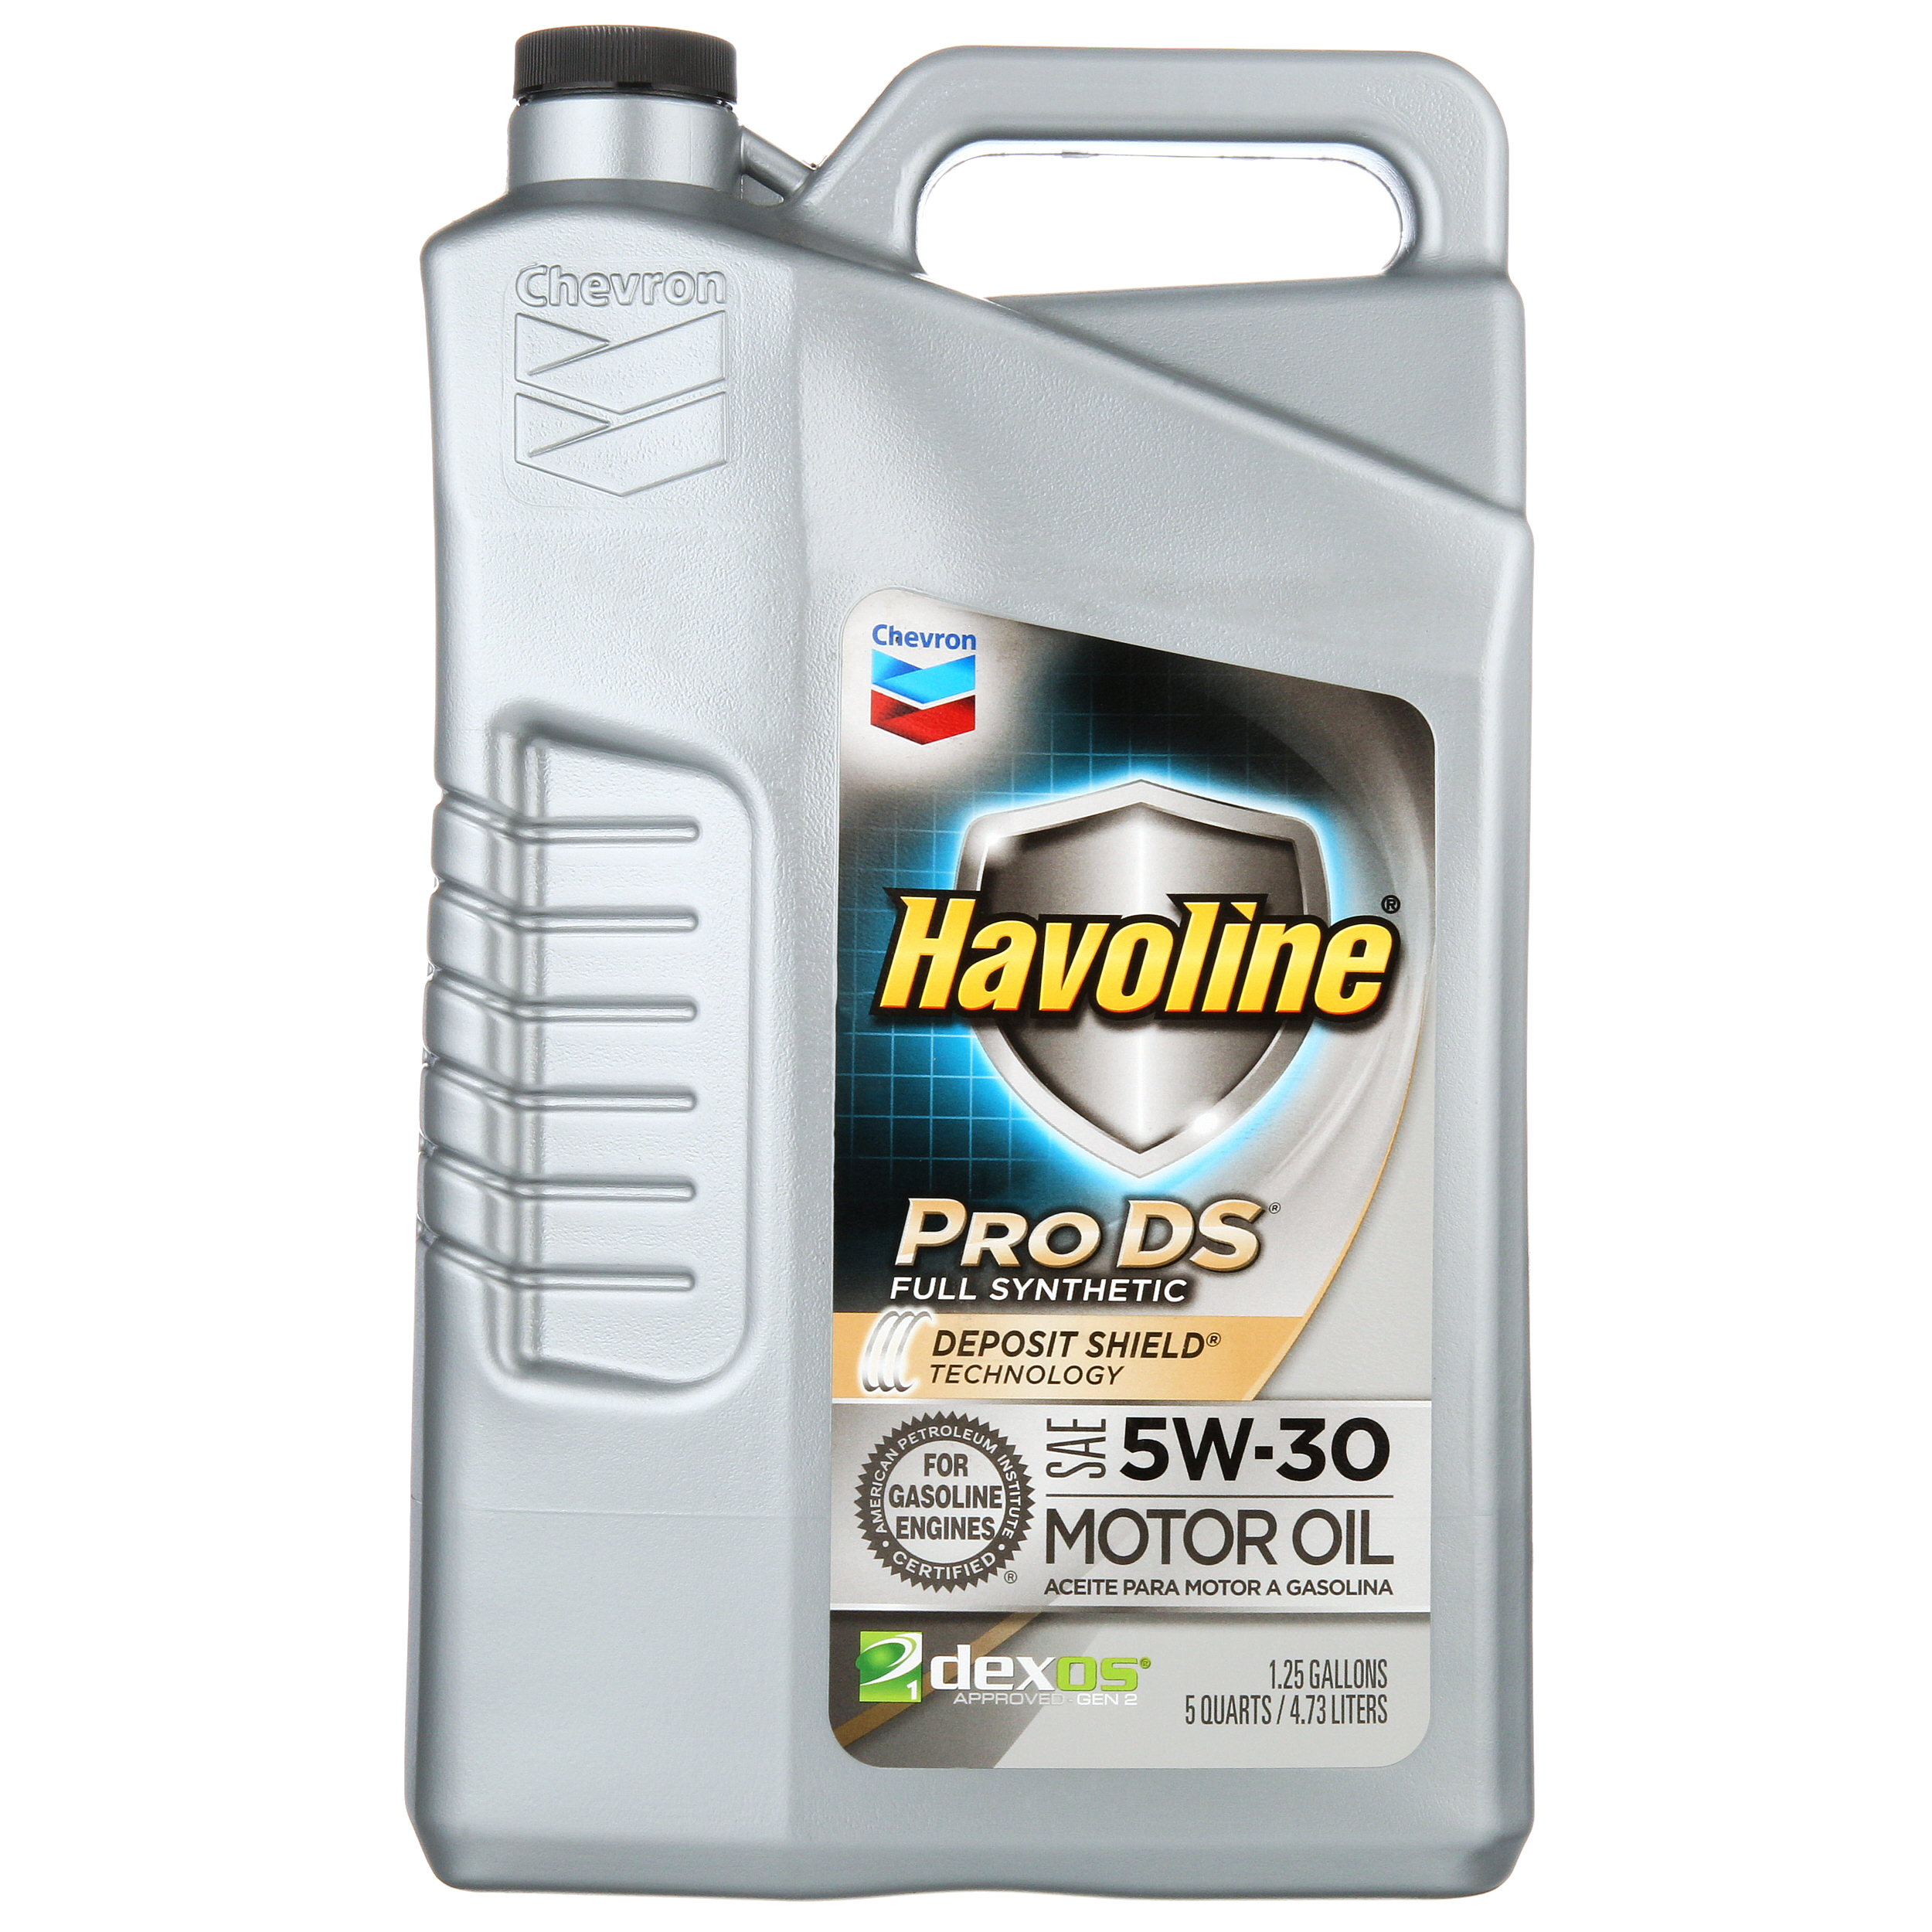 Chevron Havoline Pro-DS Synthetic Motor Oil 5W-30, 5 quart - image 4 of 7